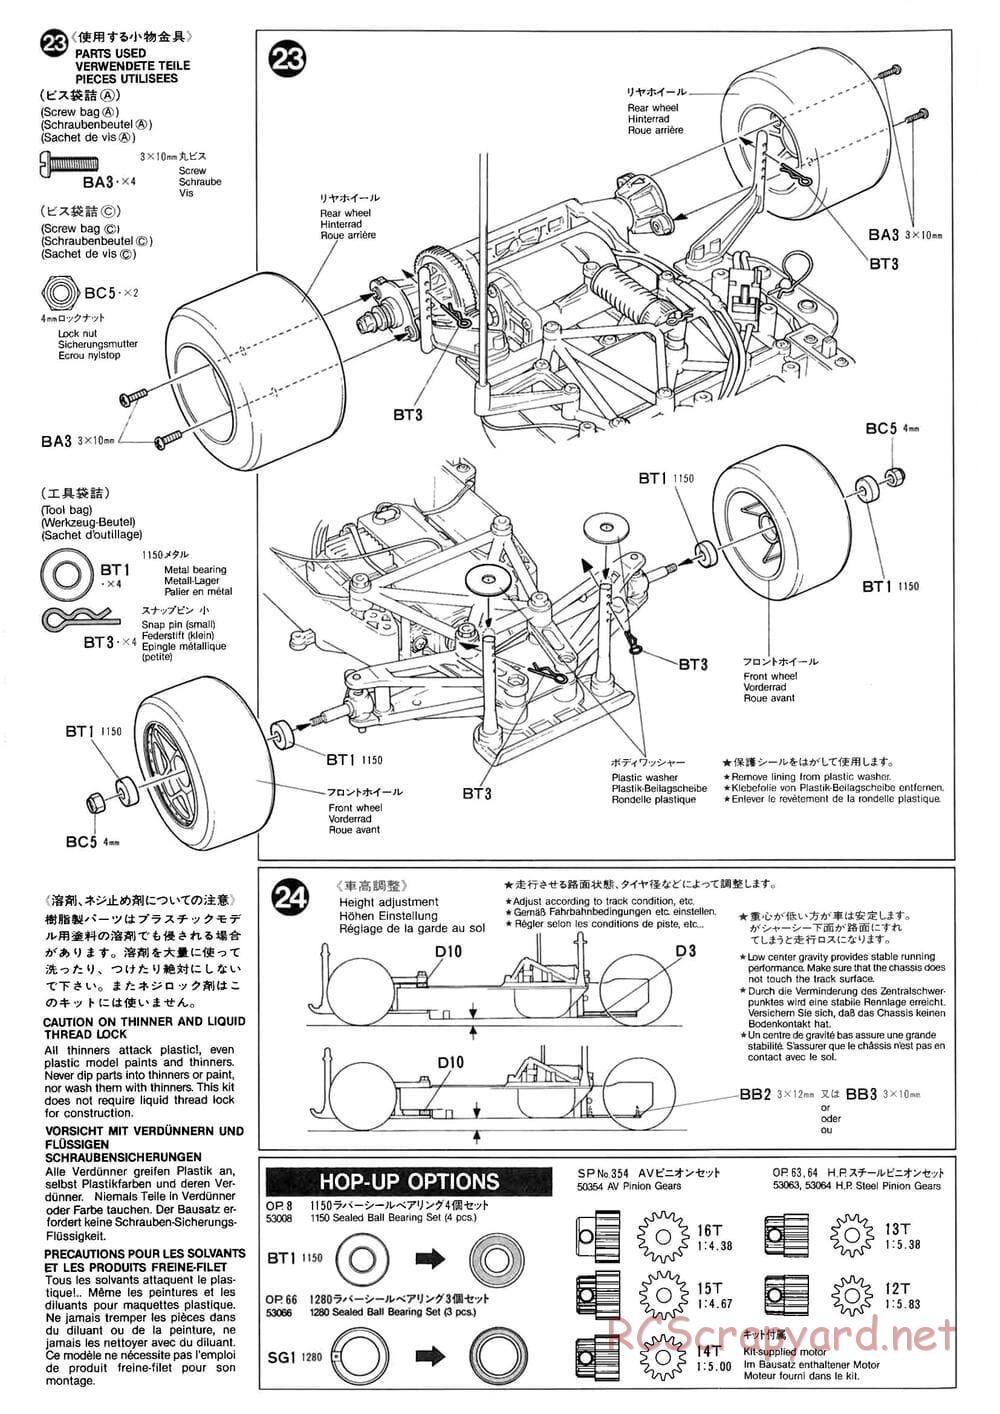 Tamiya - Group-C Chassis - Manual - Page 14